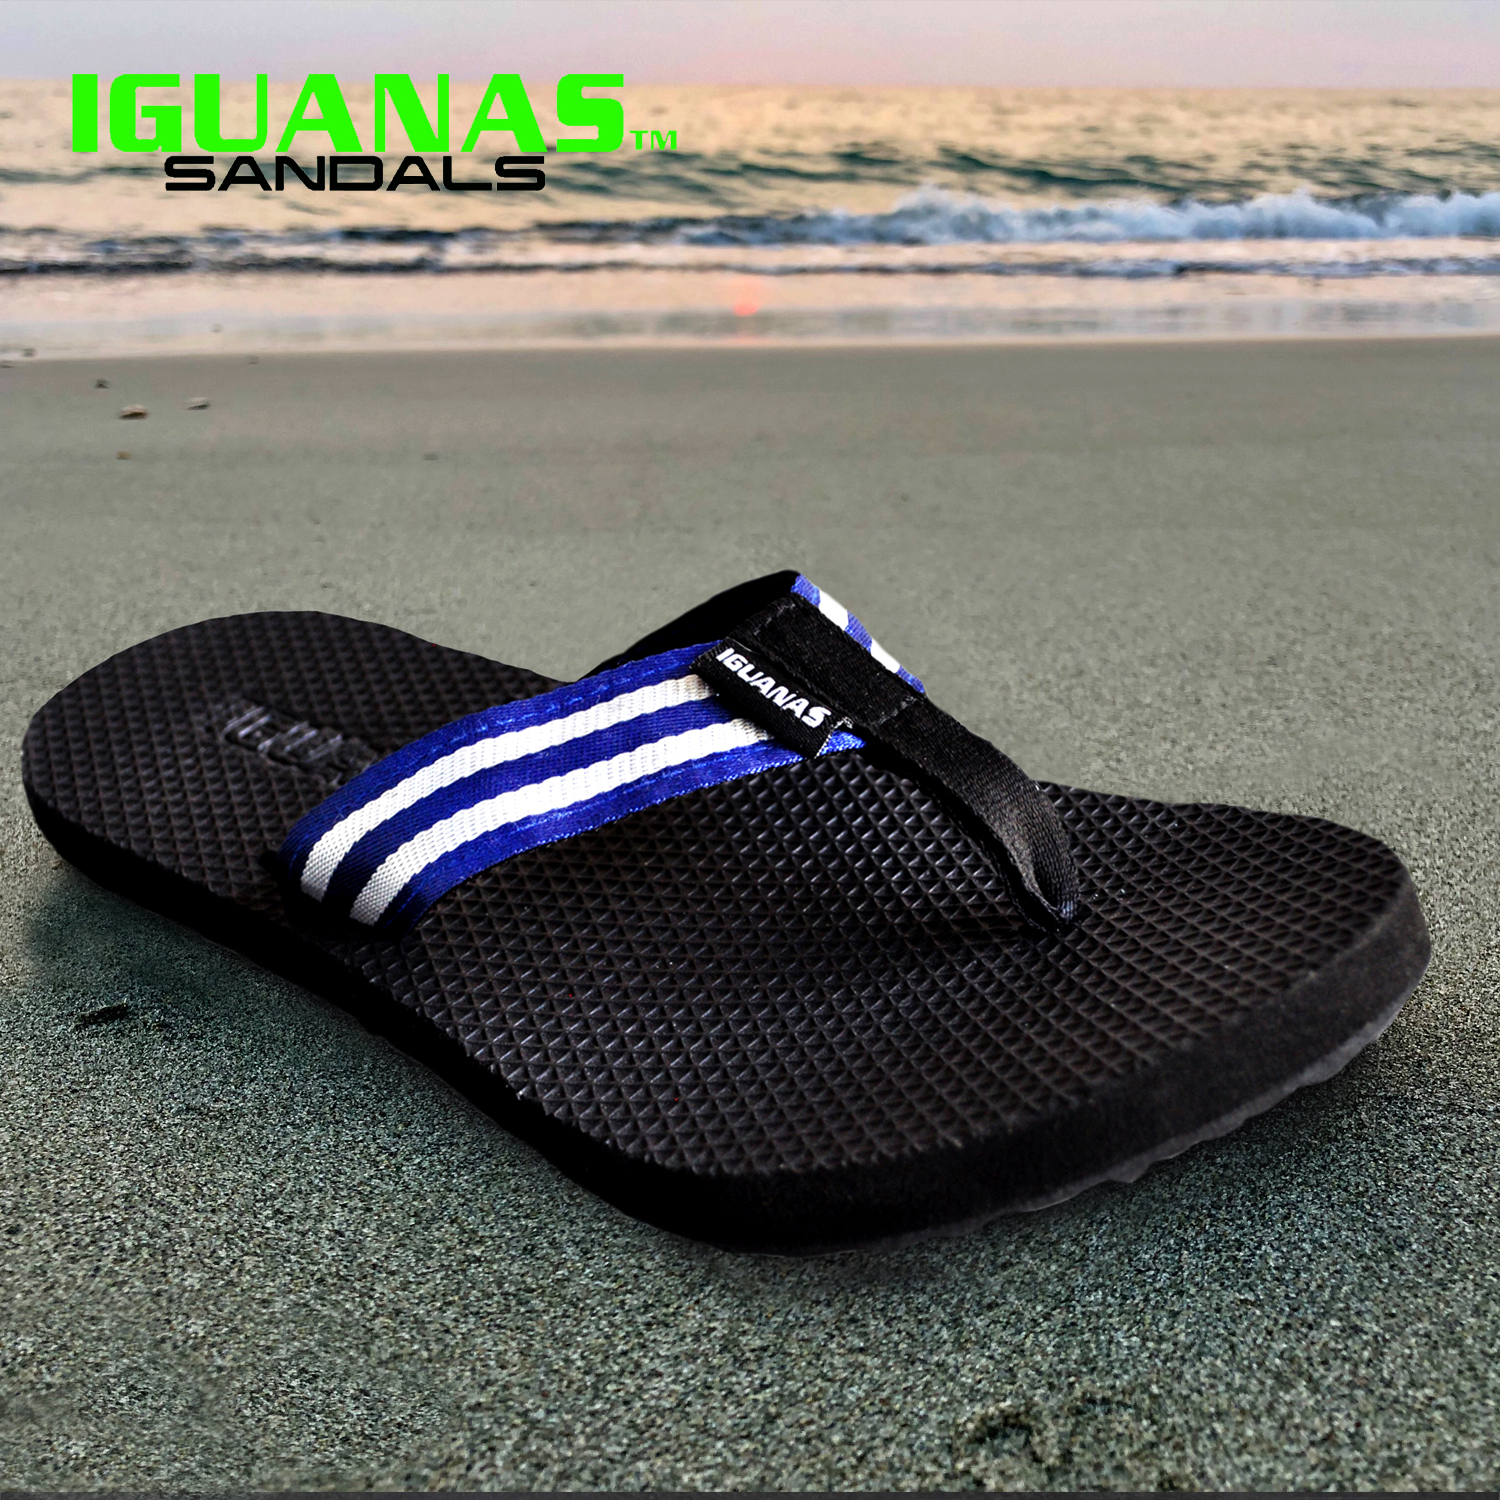 iguana slippers